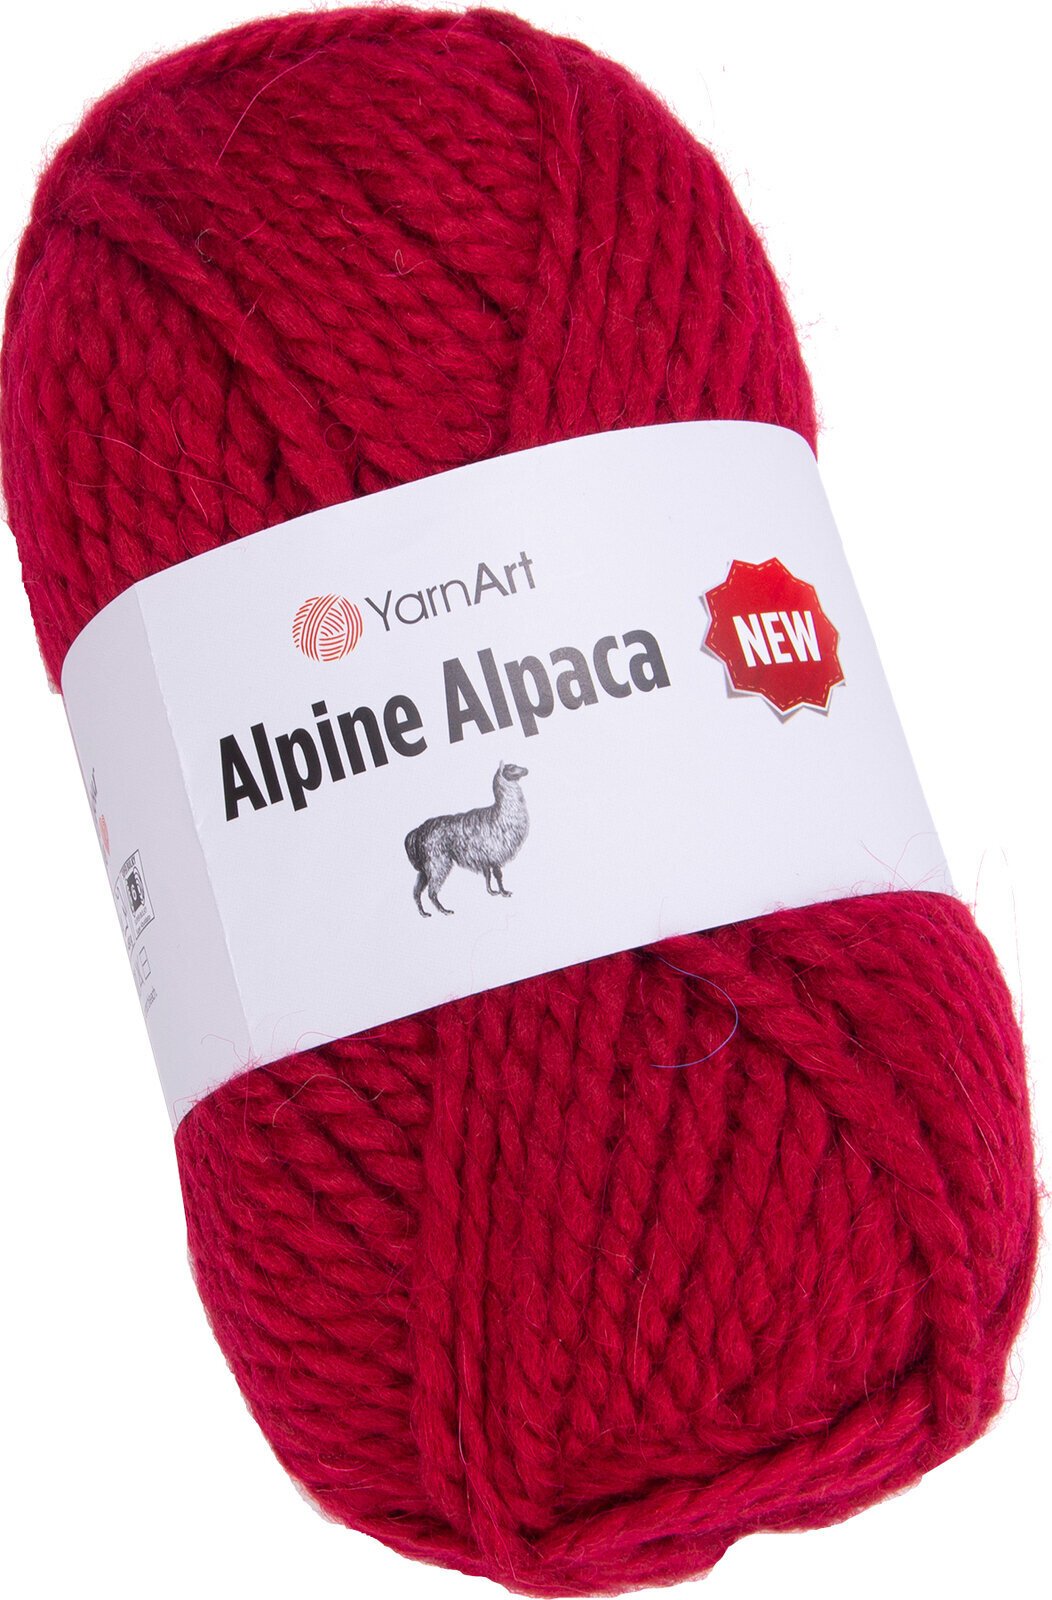 Knitting Yarn Yarn Art Alpine Alpaca New 1434 Knitting Yarn